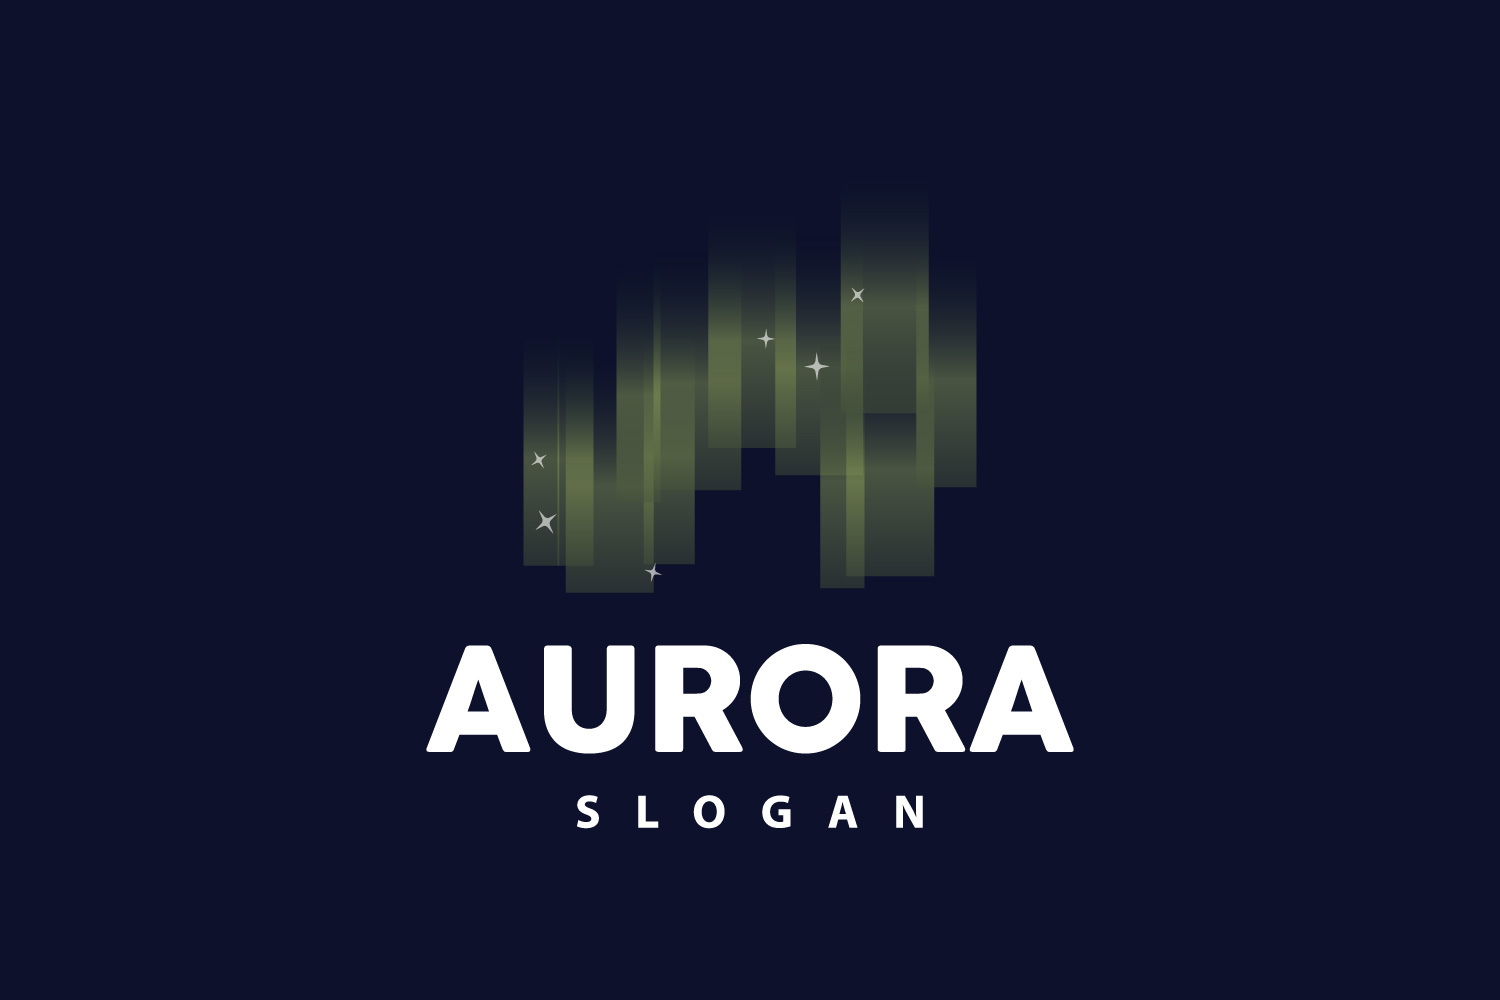 Aurora Light Wave Sky View LogoV3